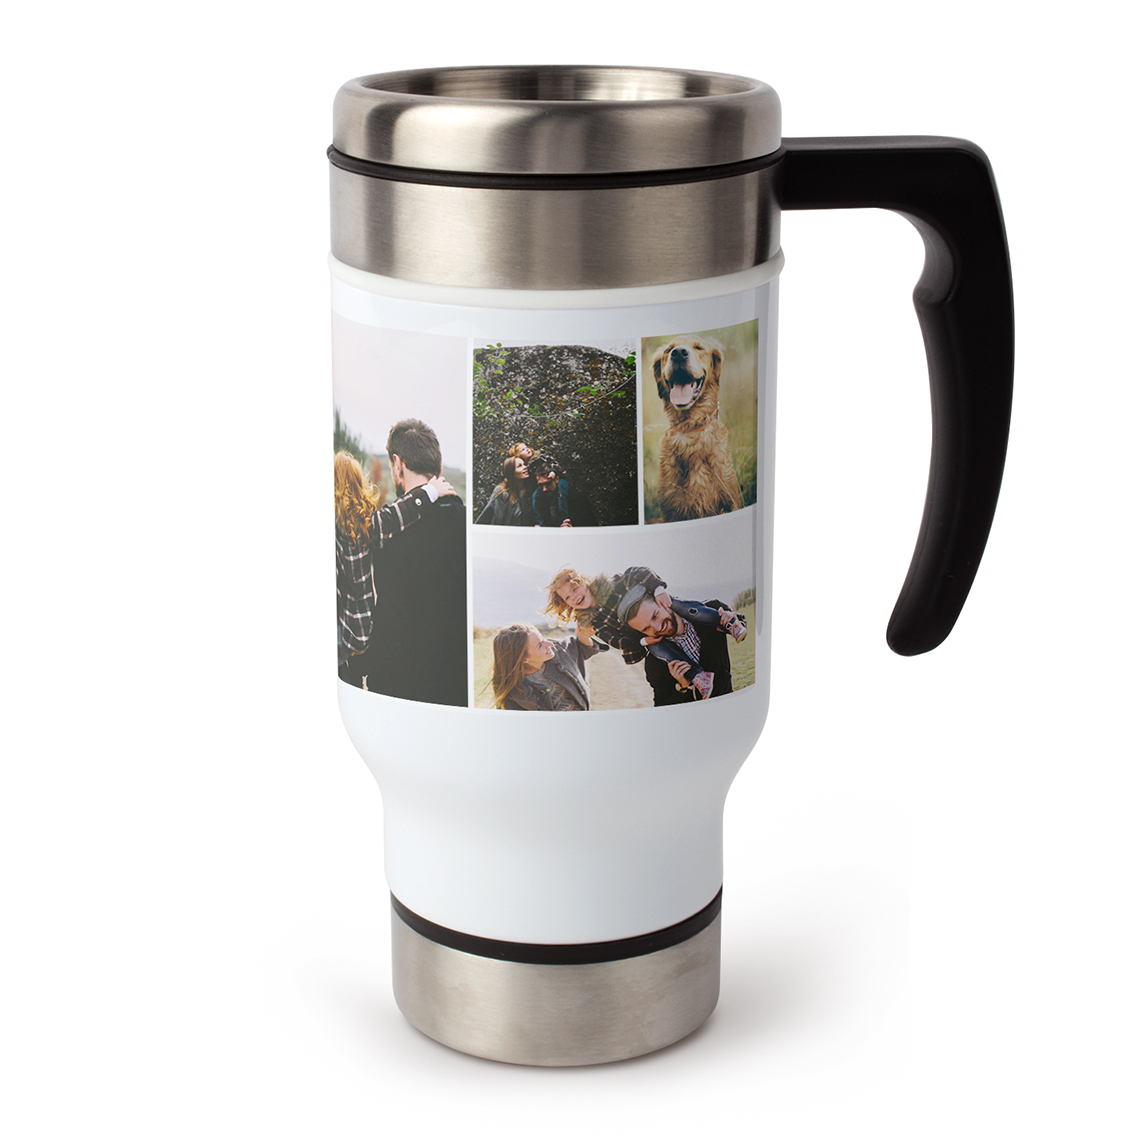 Collage Travel Coffee Mug with Handle, 13 oz. 